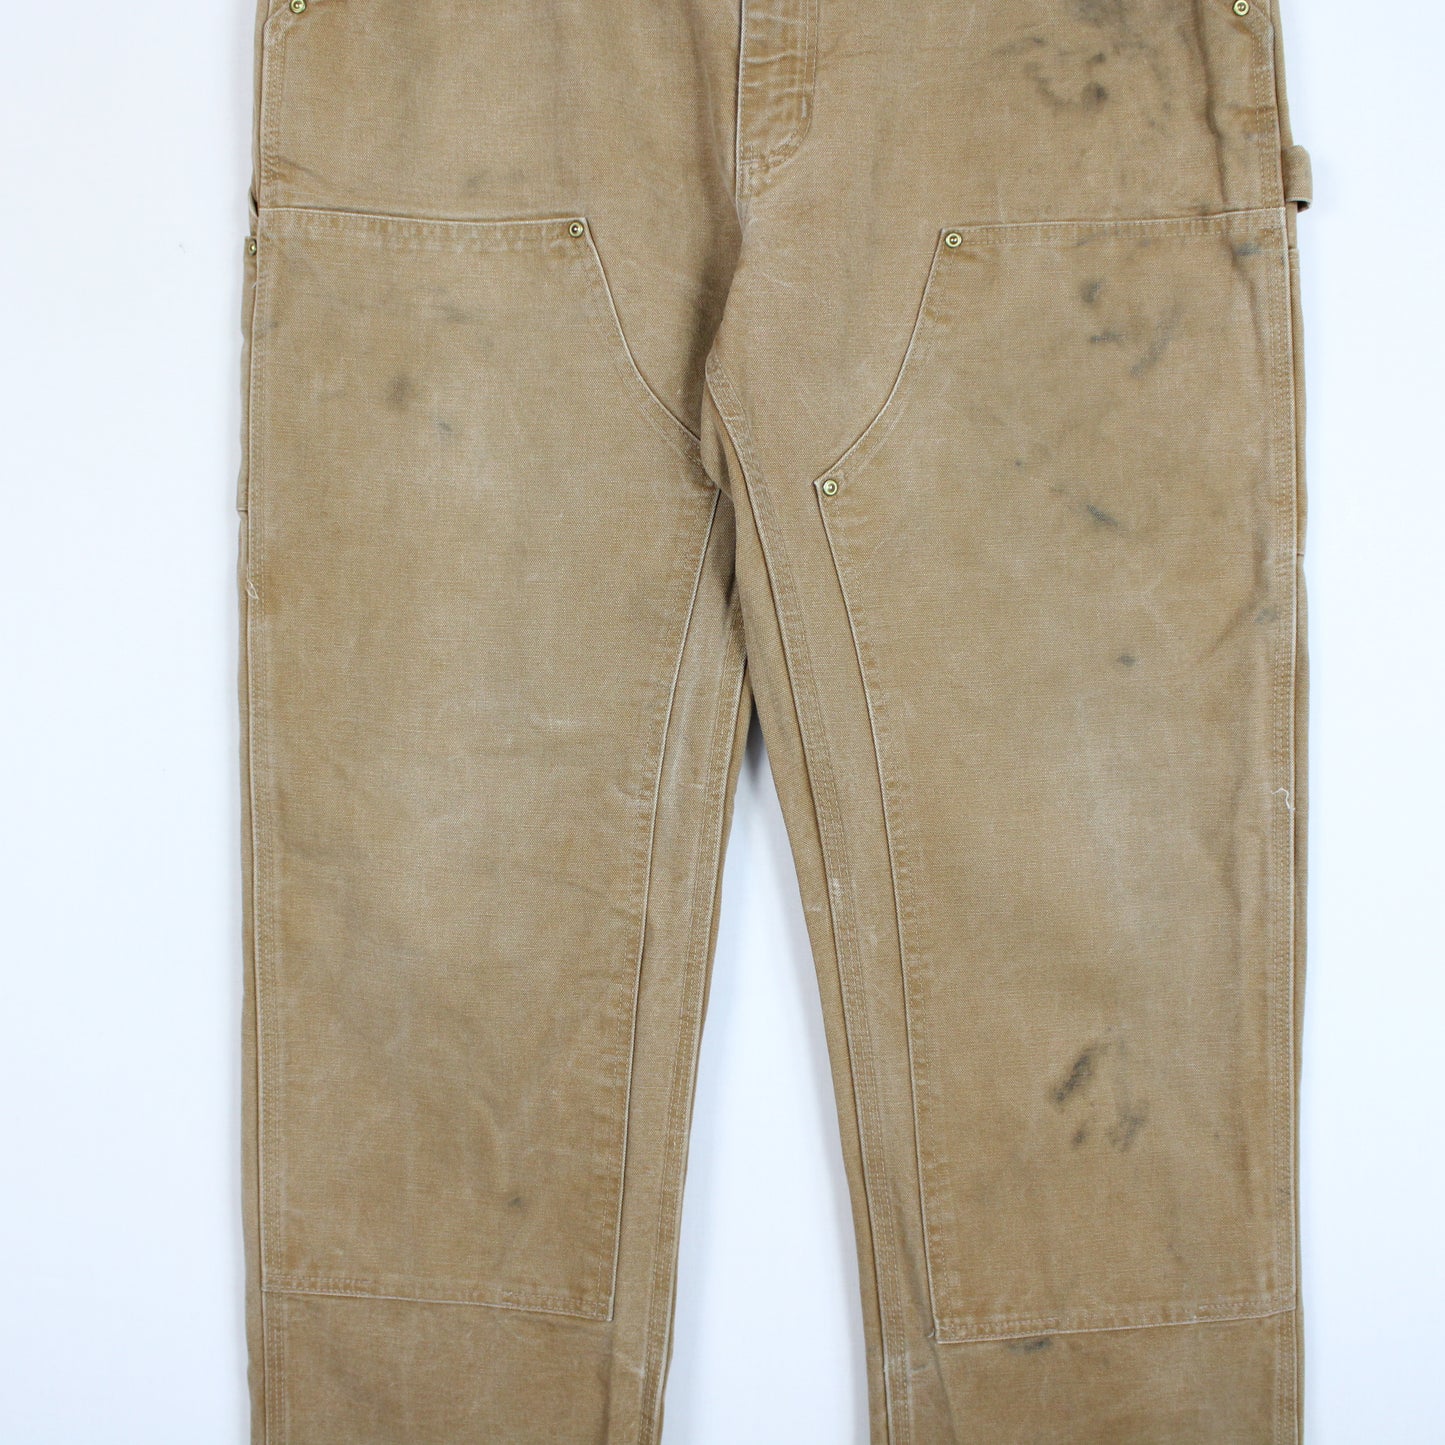 Vintage Carhartt Double Knee Carpenter Pants - 36x34